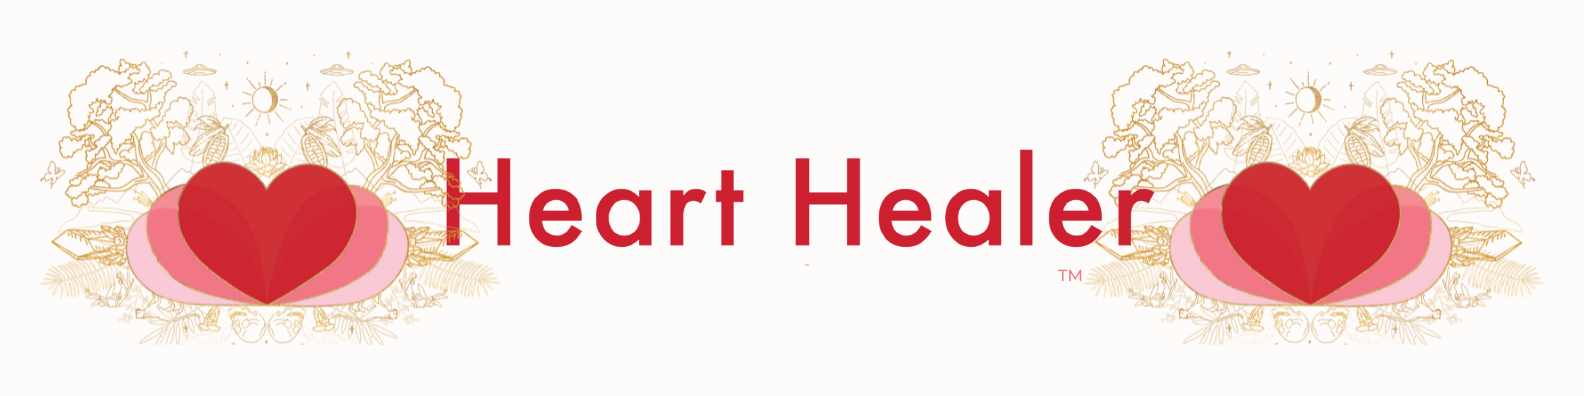 Heart Healer logo